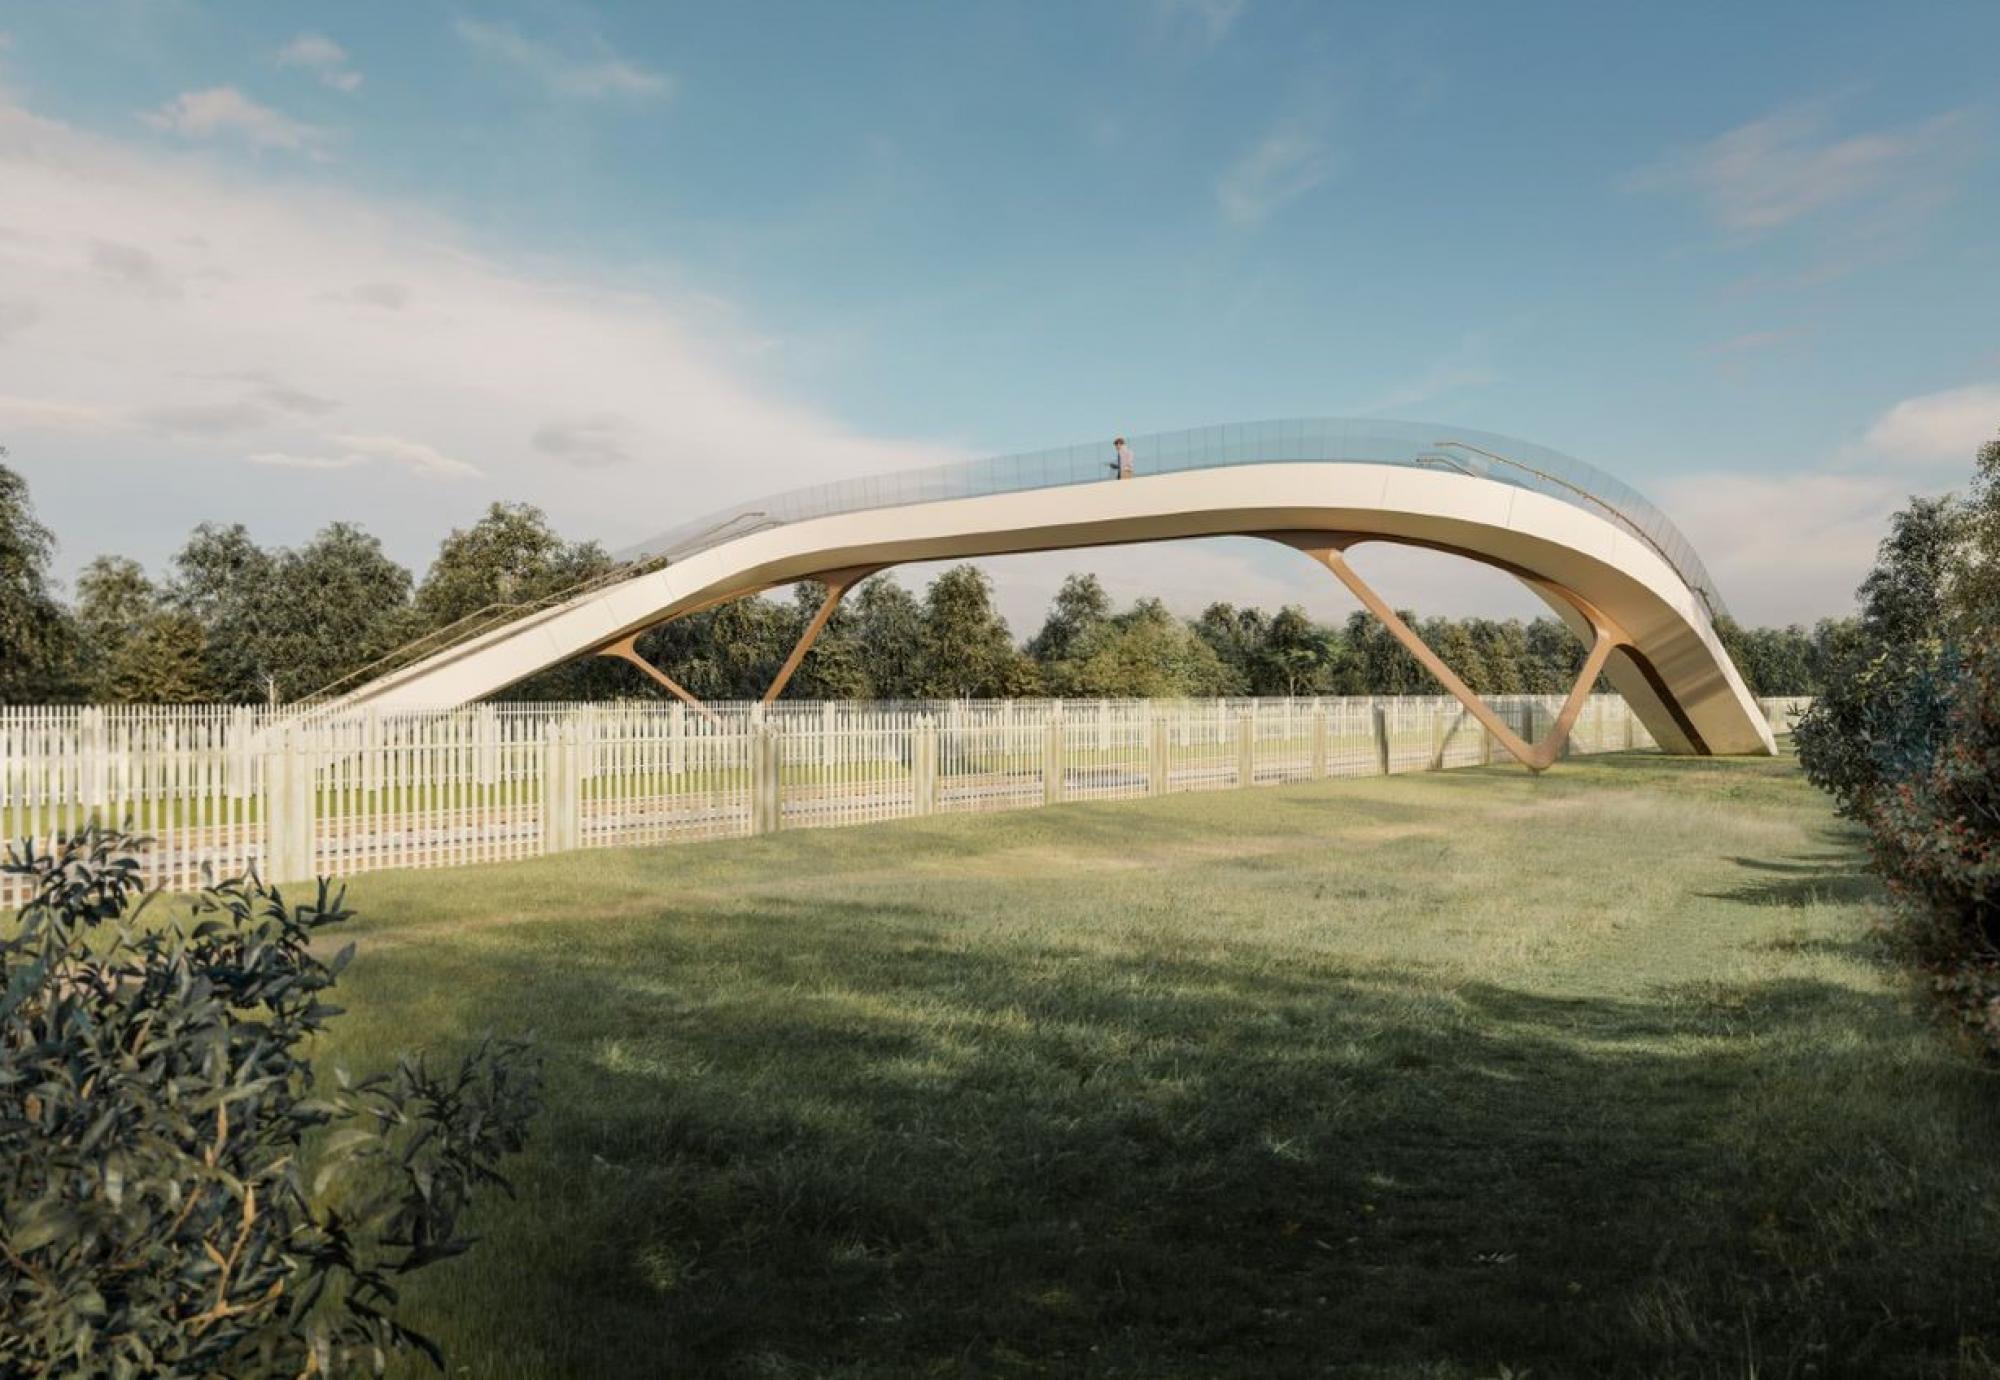 New Network Rail footbridge design